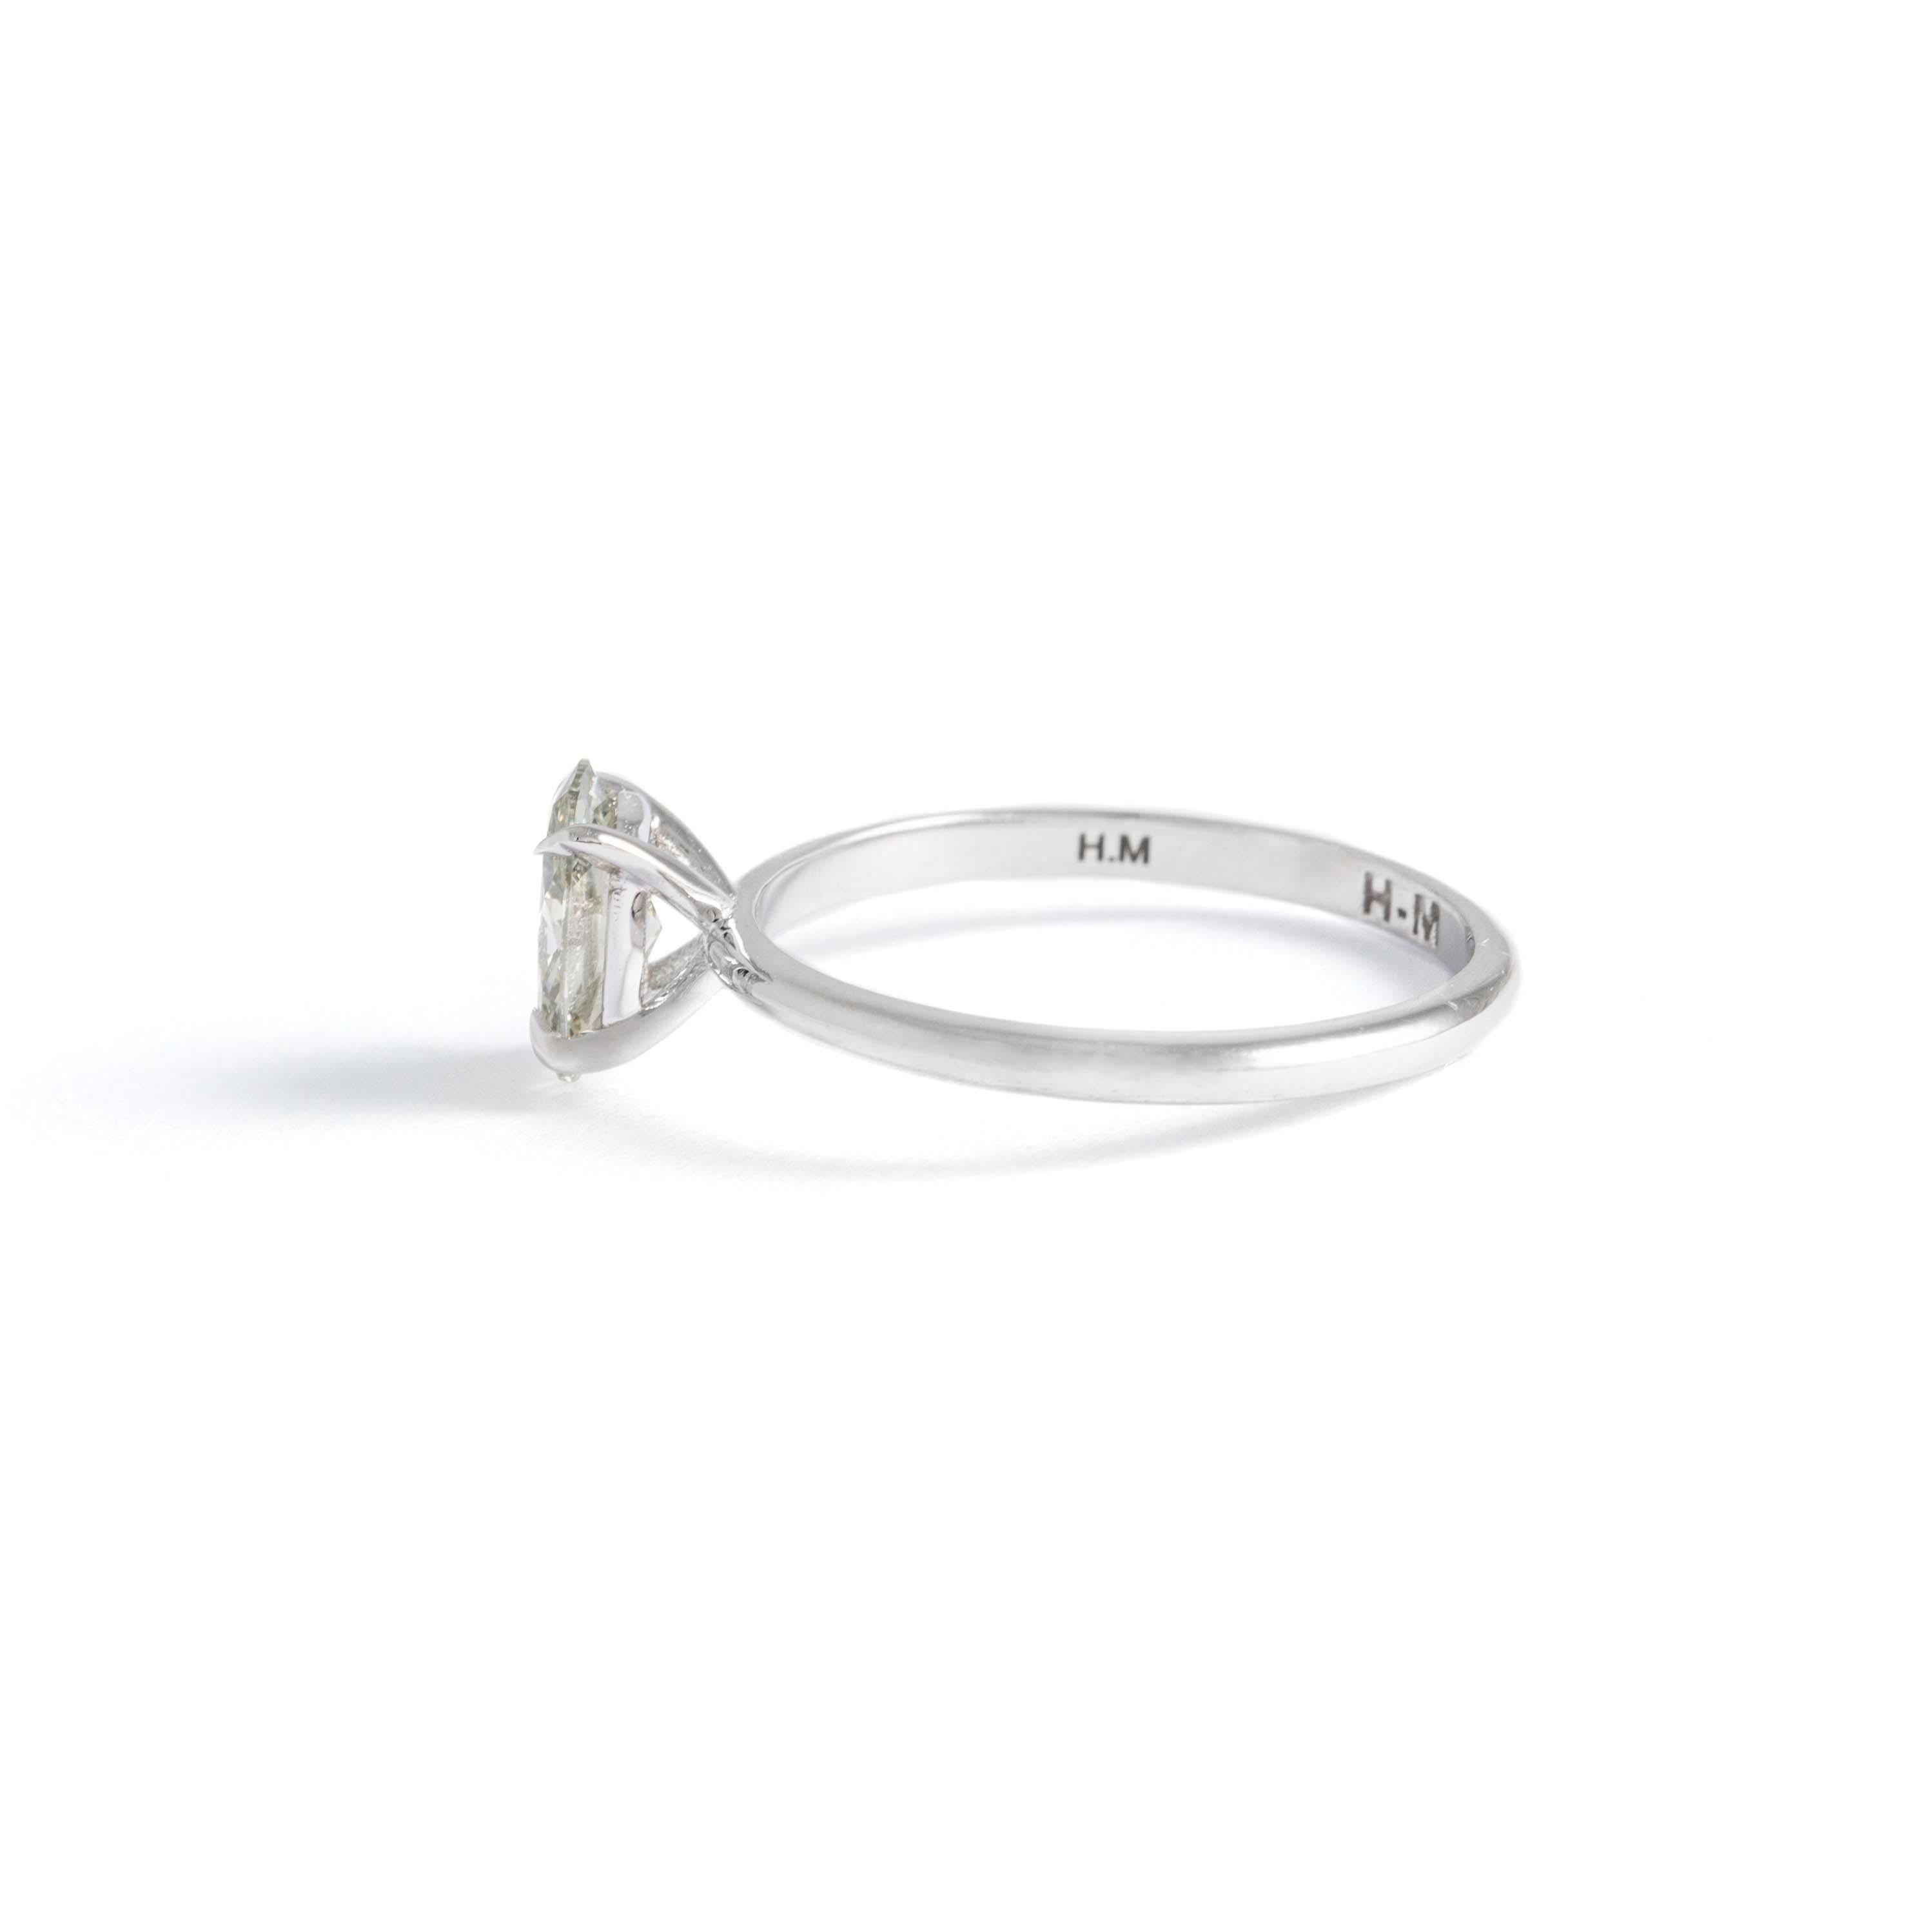 Oval Cut 1.10 Carat Fancy Light Gray Diamond Solitaire Ring